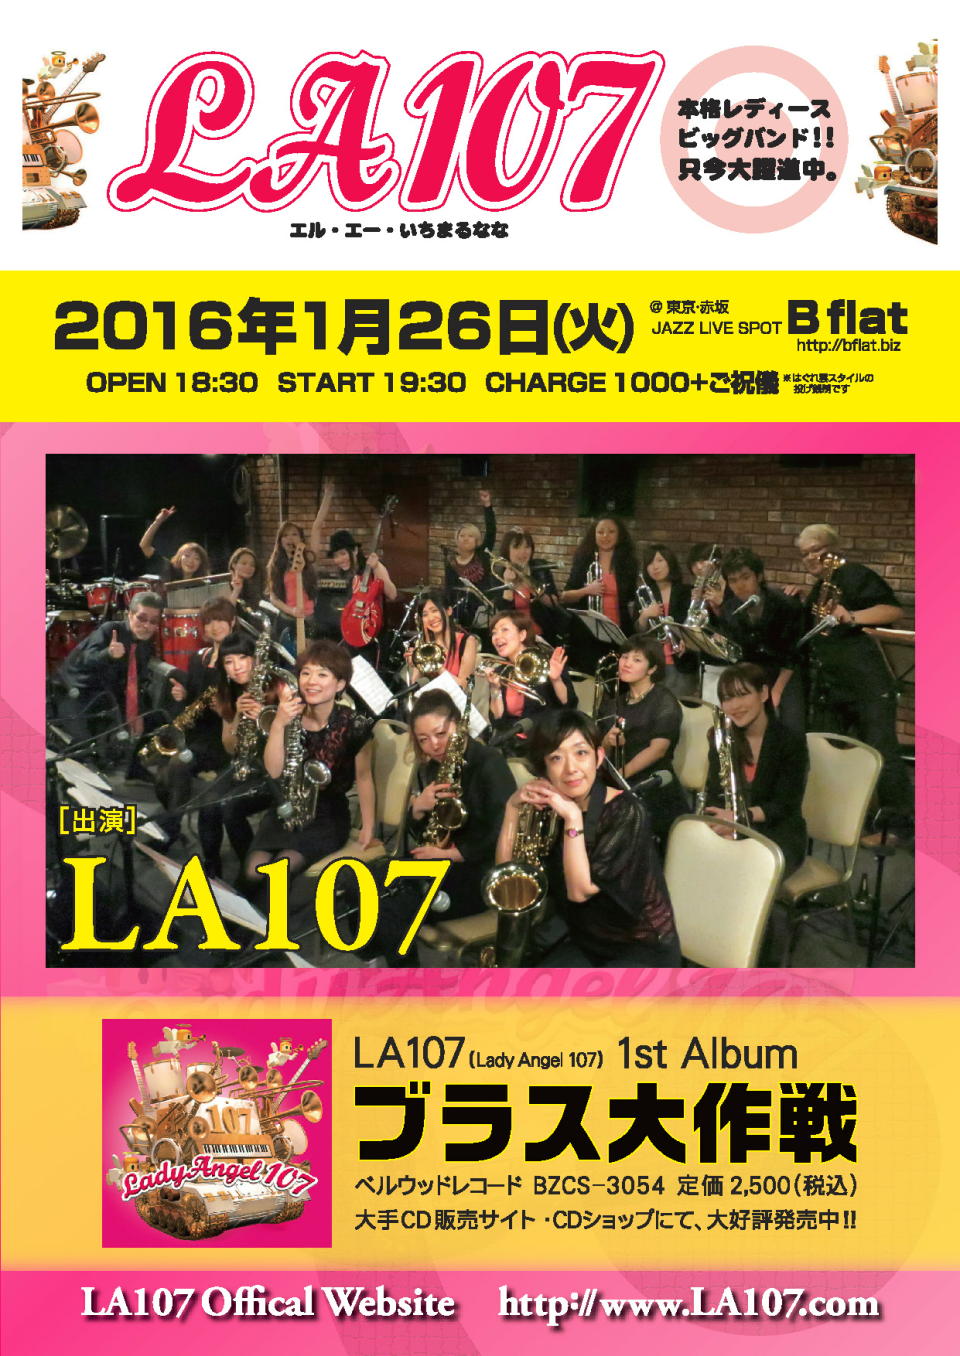 LA107ライブ 2016.1.26@赤坂B-Flat